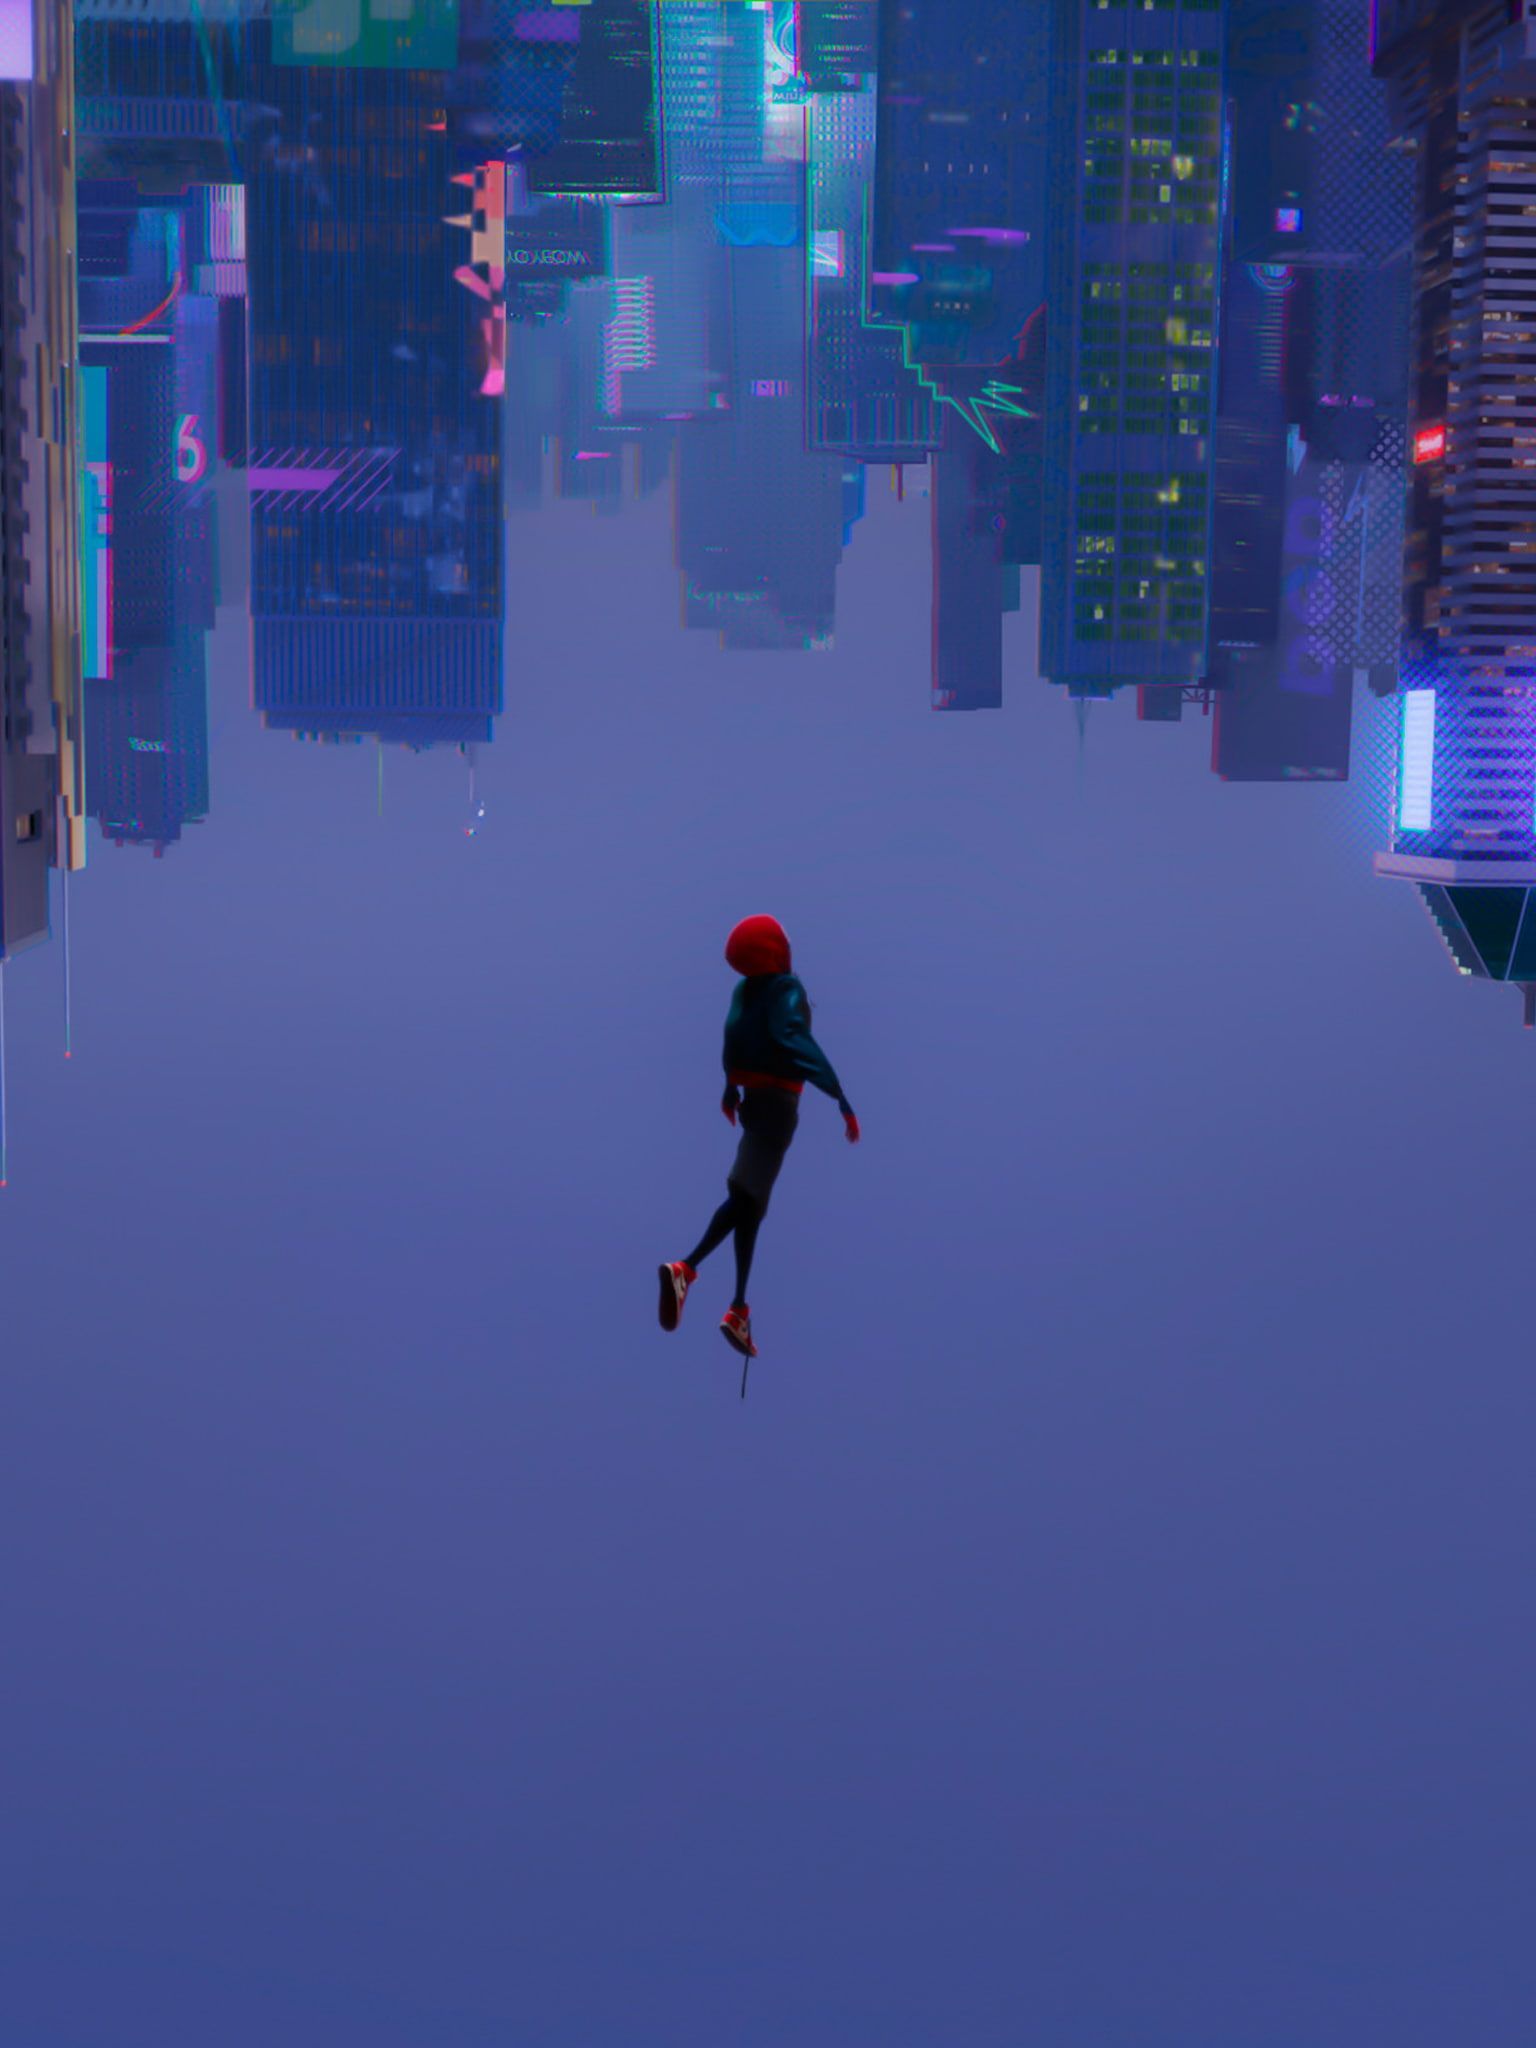 Spider Man Miles Morales #artwork Upside Down #cityscape Spider Man: Into The Spider Verse Port. Marvel Phone Wallpaper, Marvel Wallpaper Hd, Cityscape Wallpaper